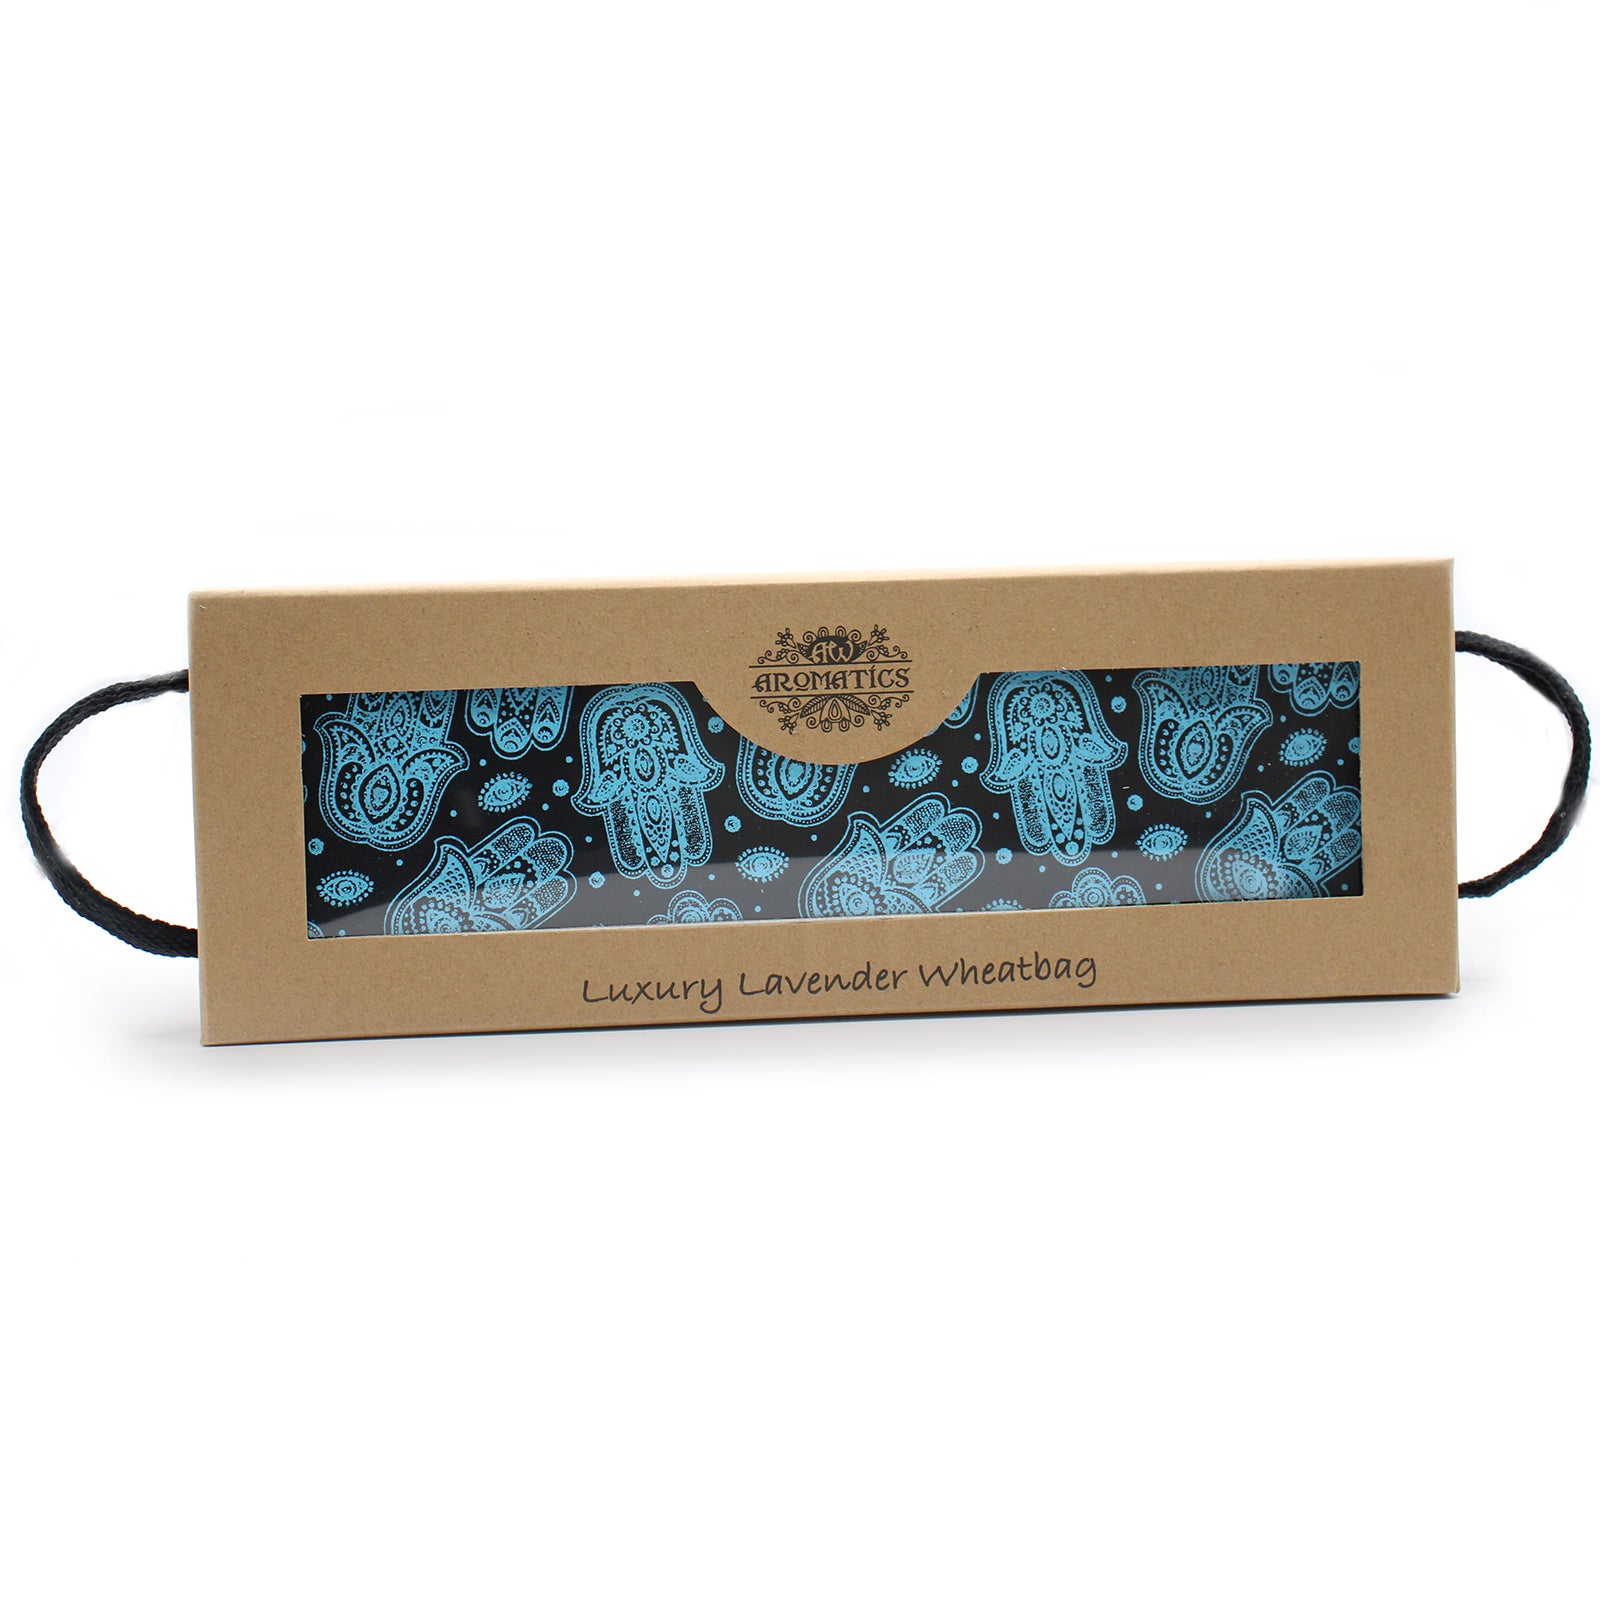 Luxury Lavender  Wheat Bag in Gift Box  - Hamsa